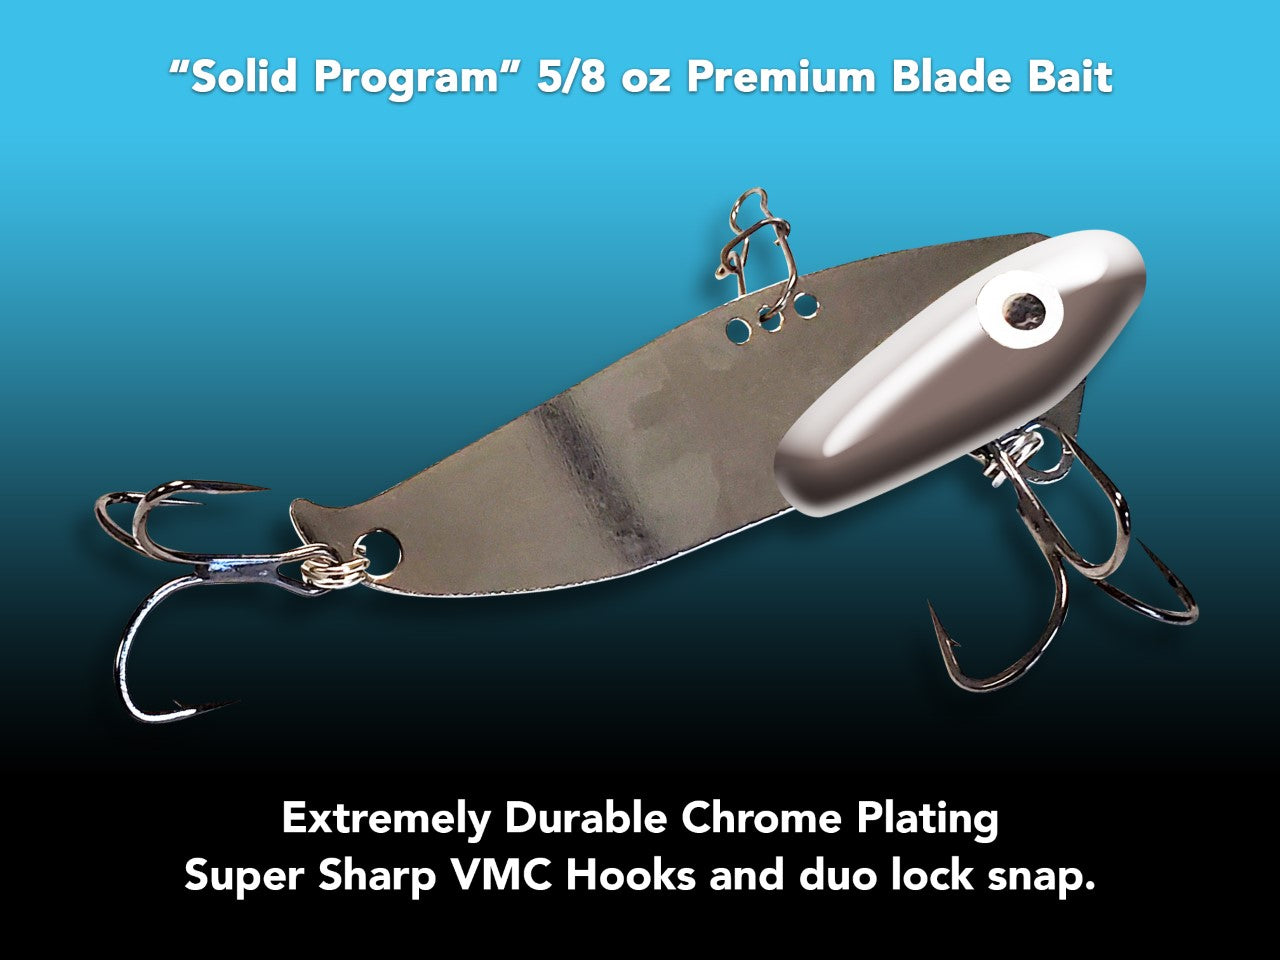 Solid Program Premium Signature Blade Bait by Todd Koehler